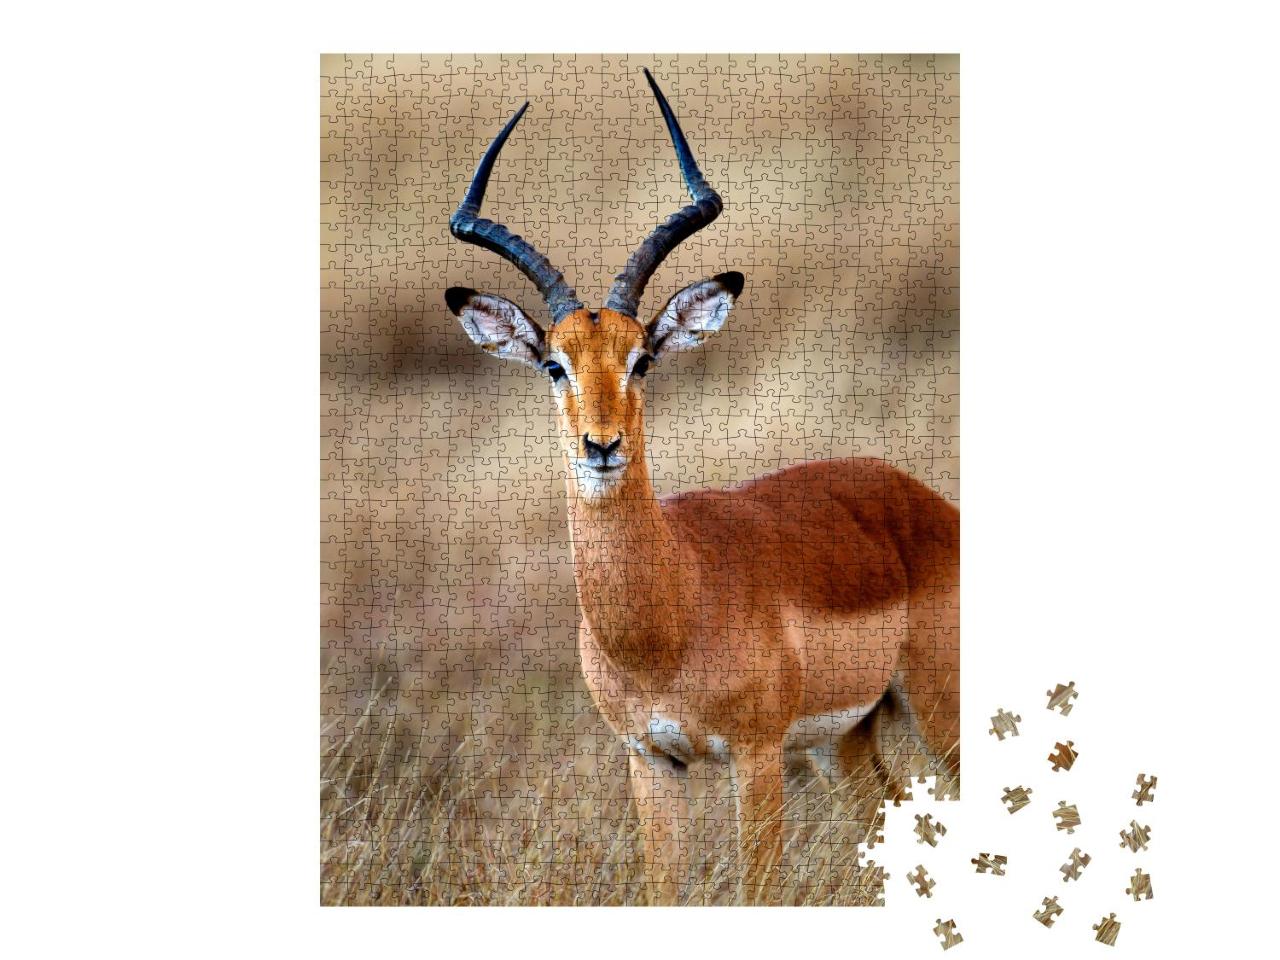 Puzzle 1000 Teile „Impala: ein Männchen im Kruger Nationalpark, Südafrika“